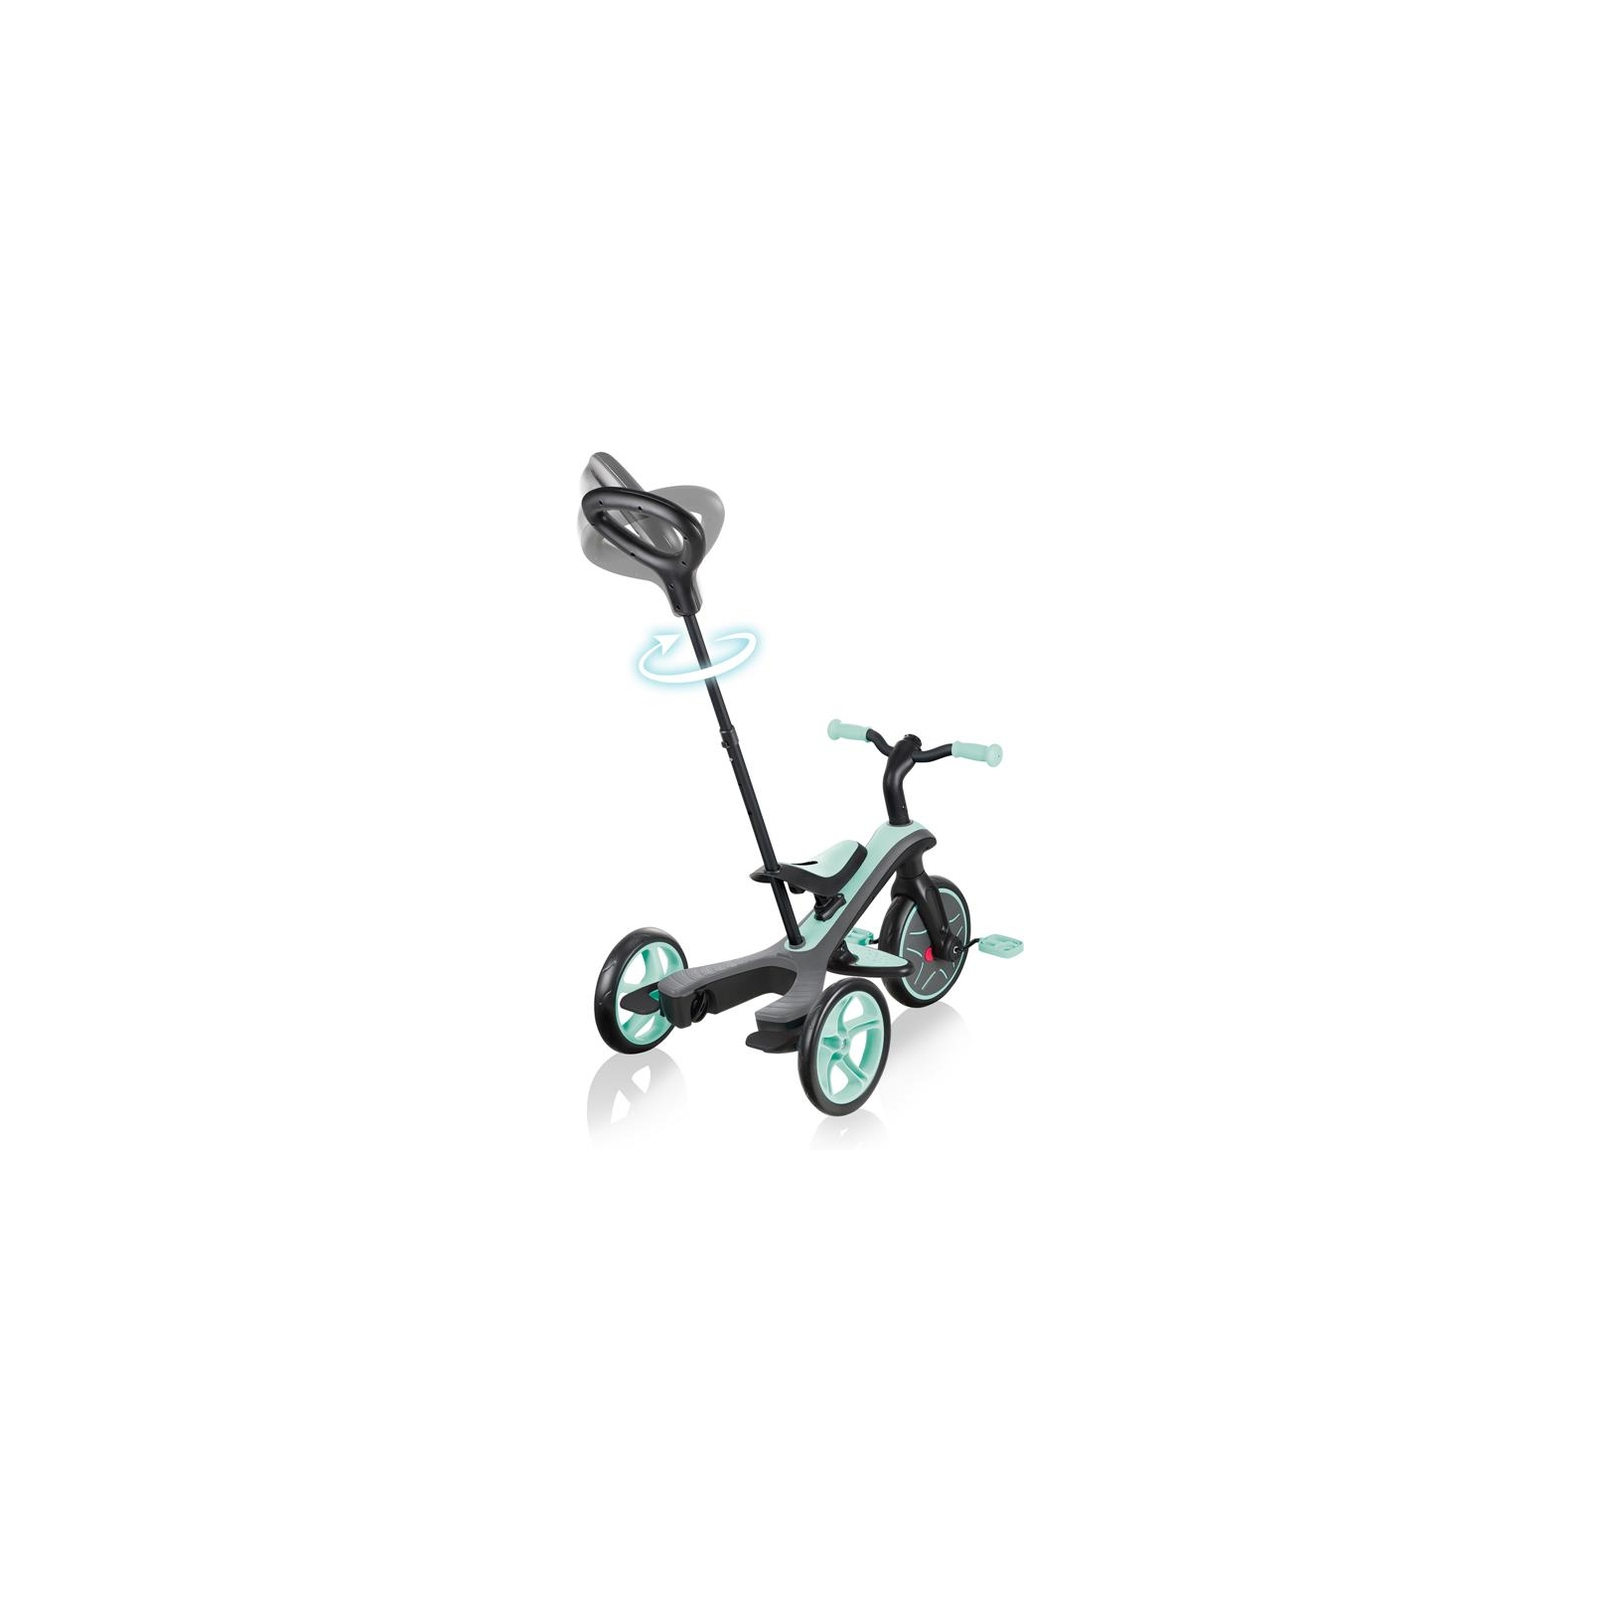 Дитячий велосипед Globber 4 в 1 Explorer Trike Teal Turquoise (632-105-3) зображення 3